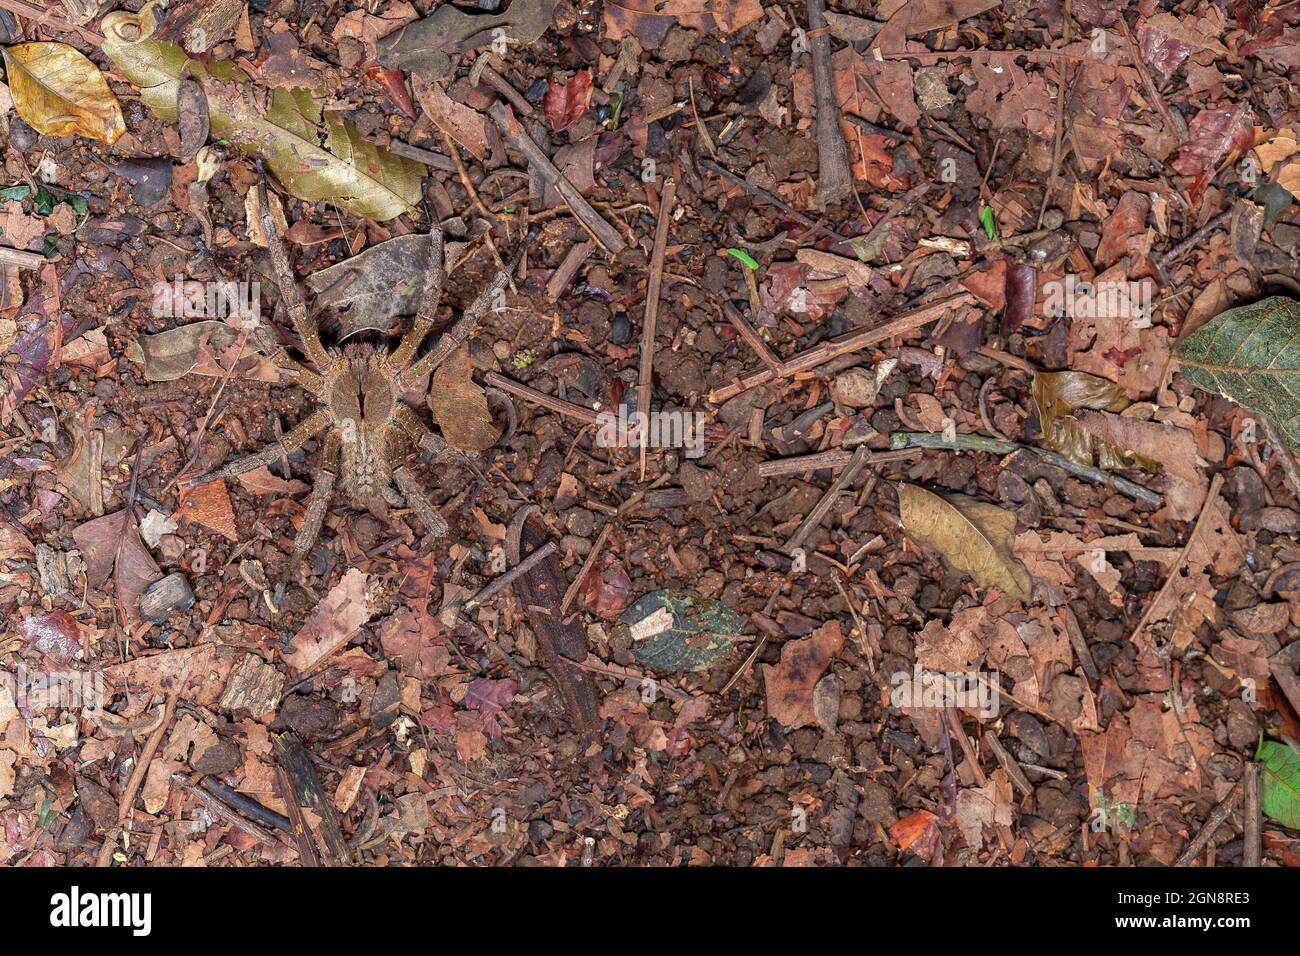 Brazilian wandering spider Phoneutria nigriventer Stock Photo